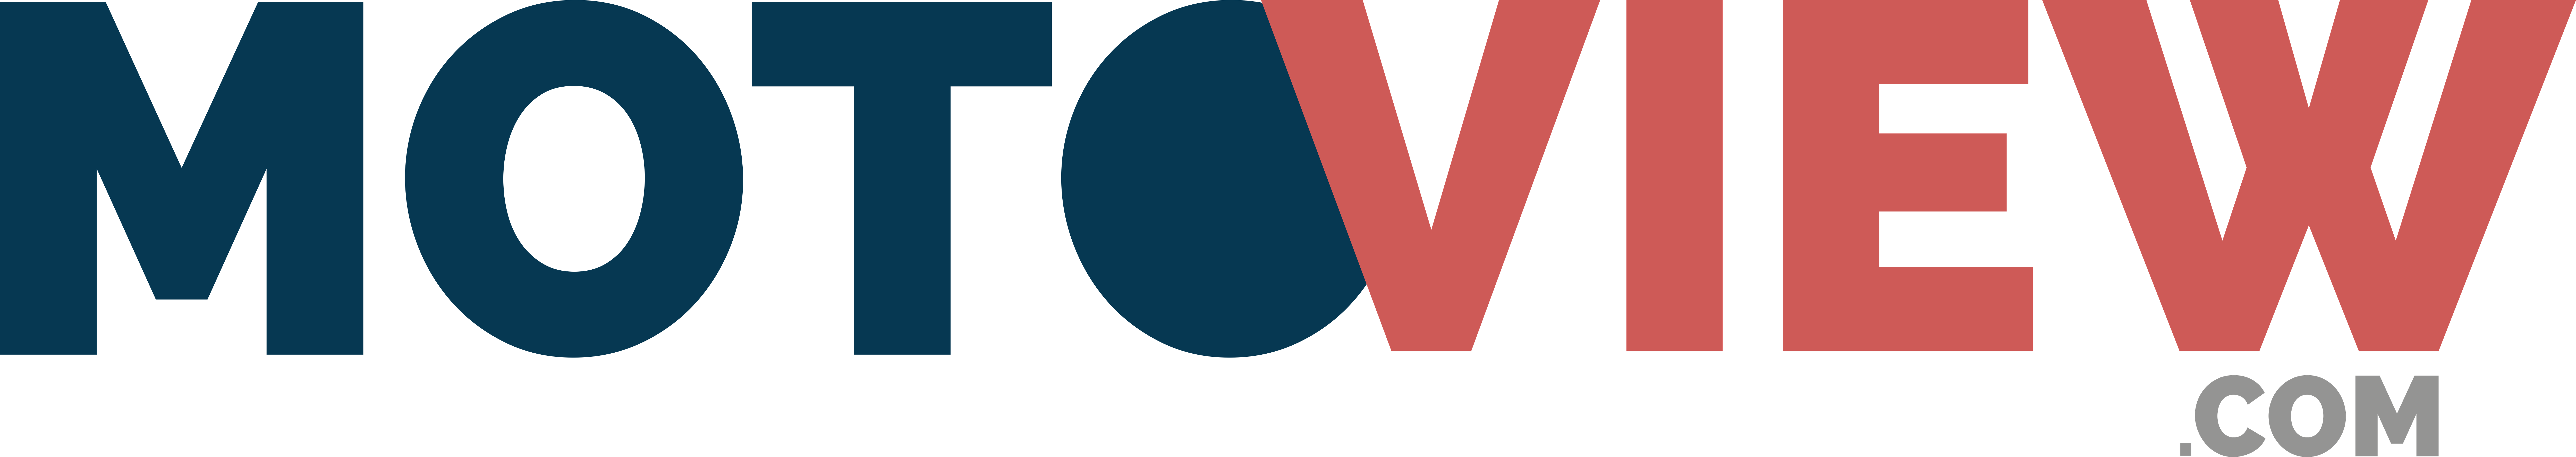 Motoview logo